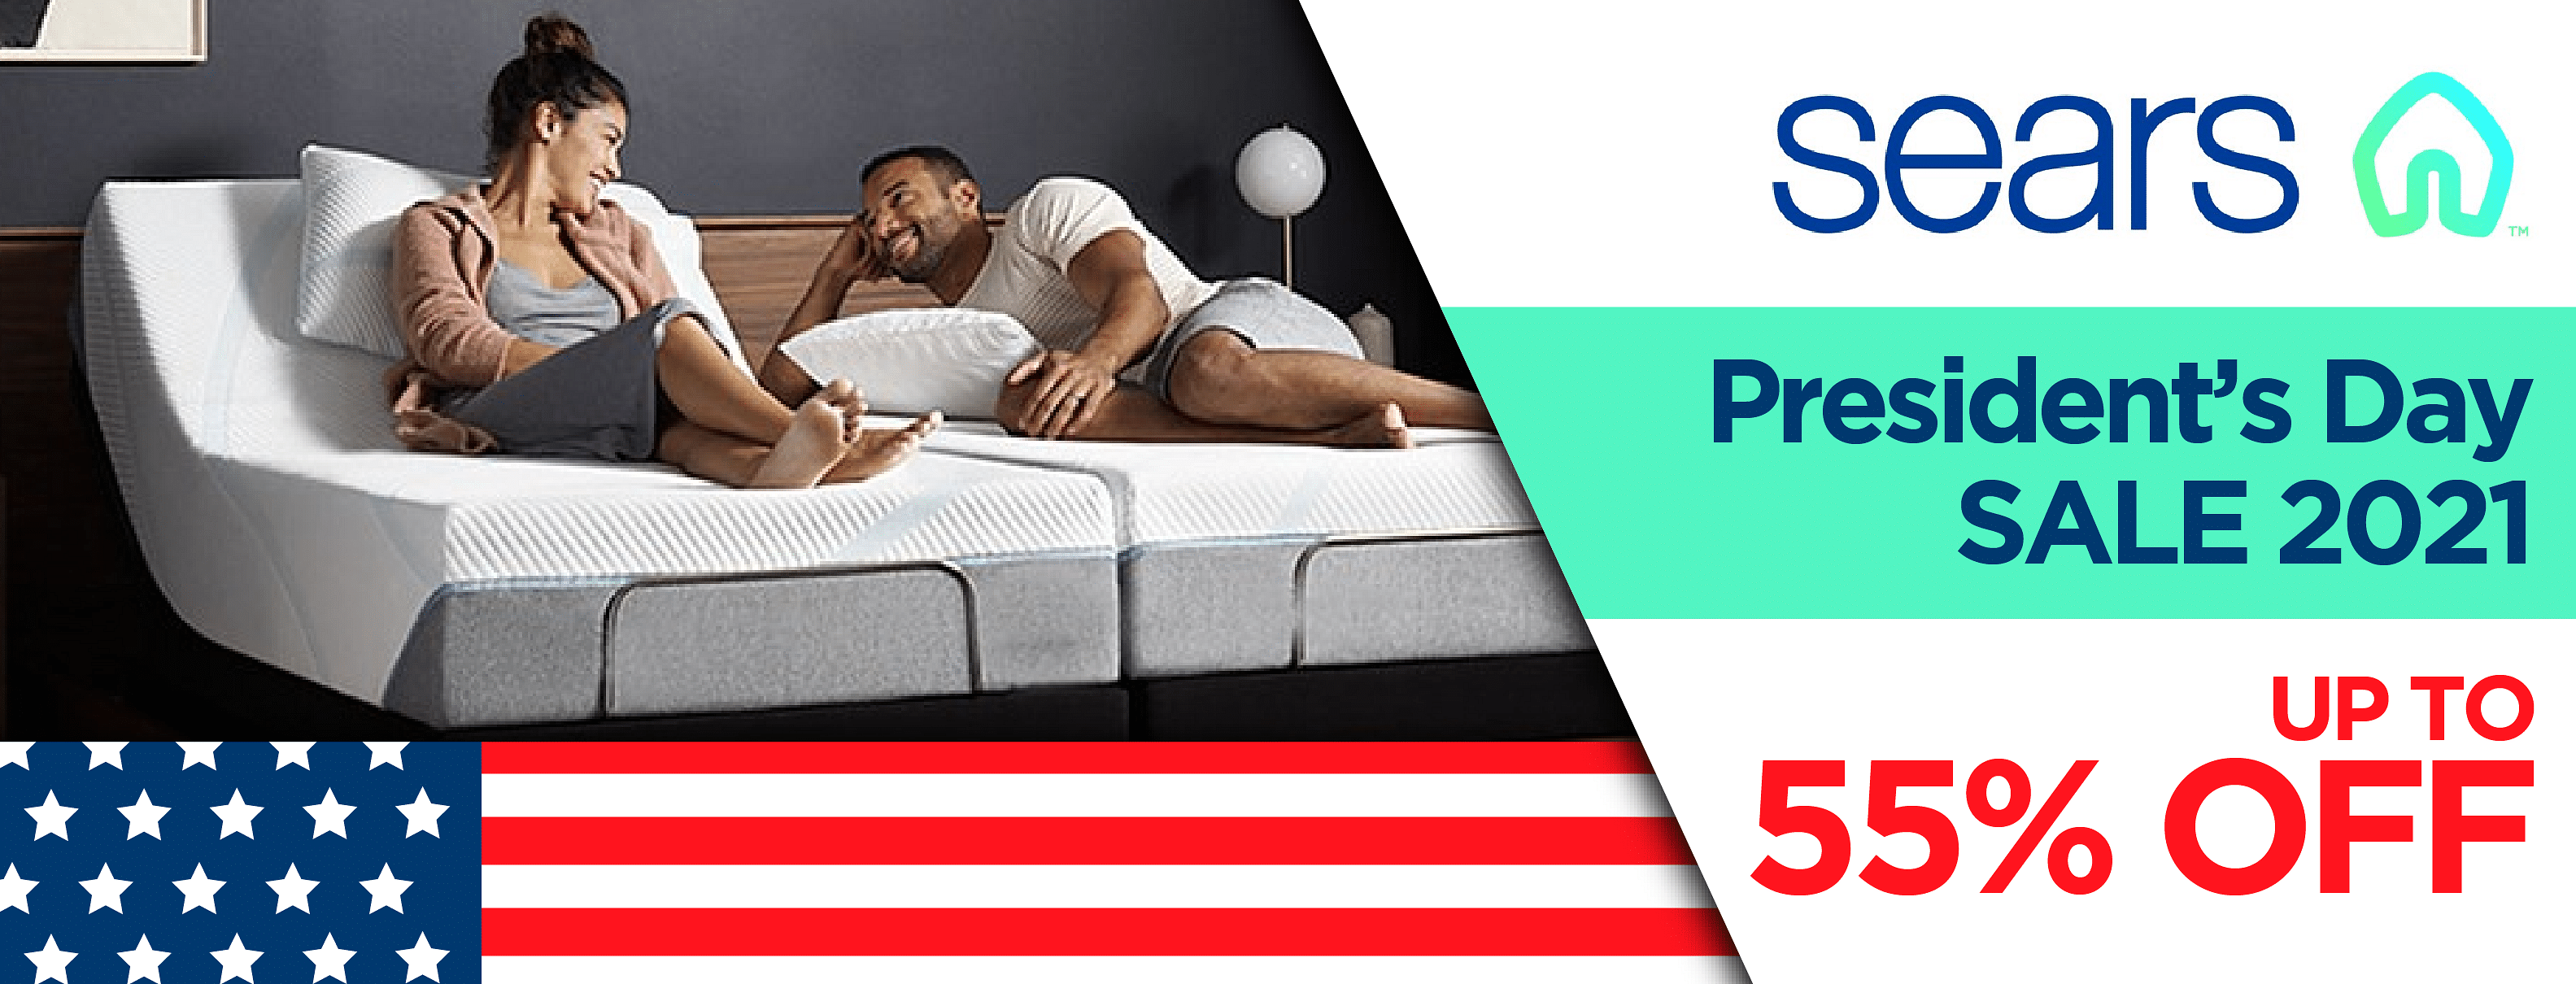 macy mattress sale presidents day